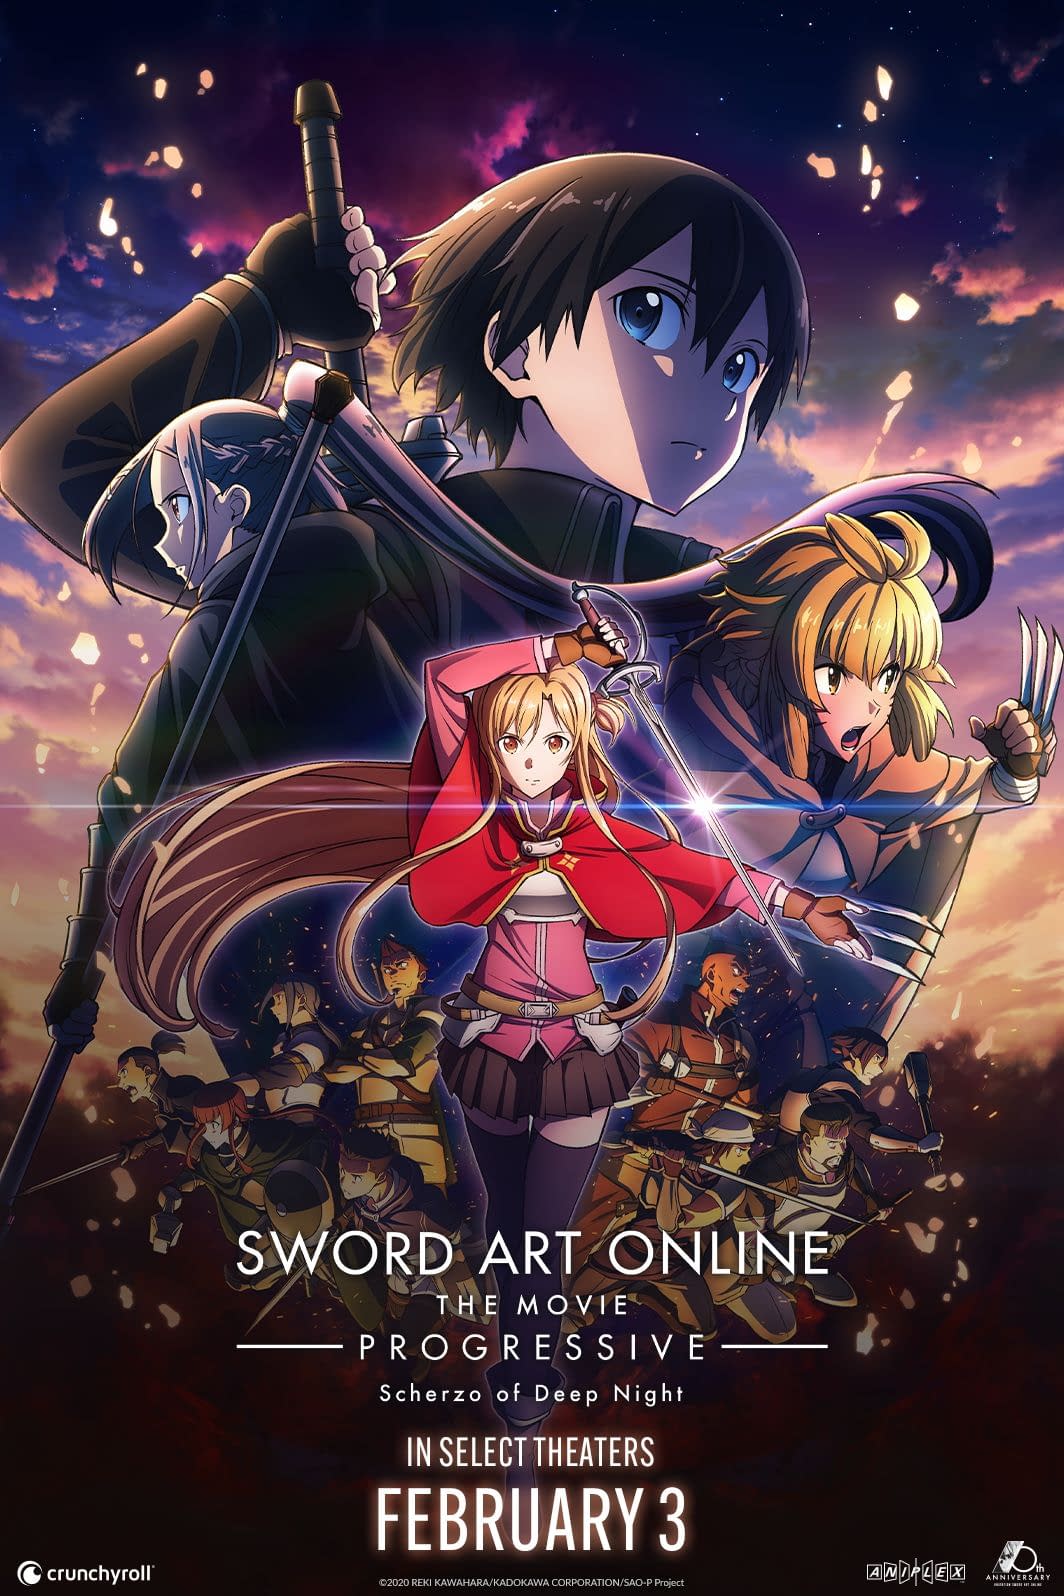 Sword Art Online Progressive Movie Sequel Tickets Now On Sale